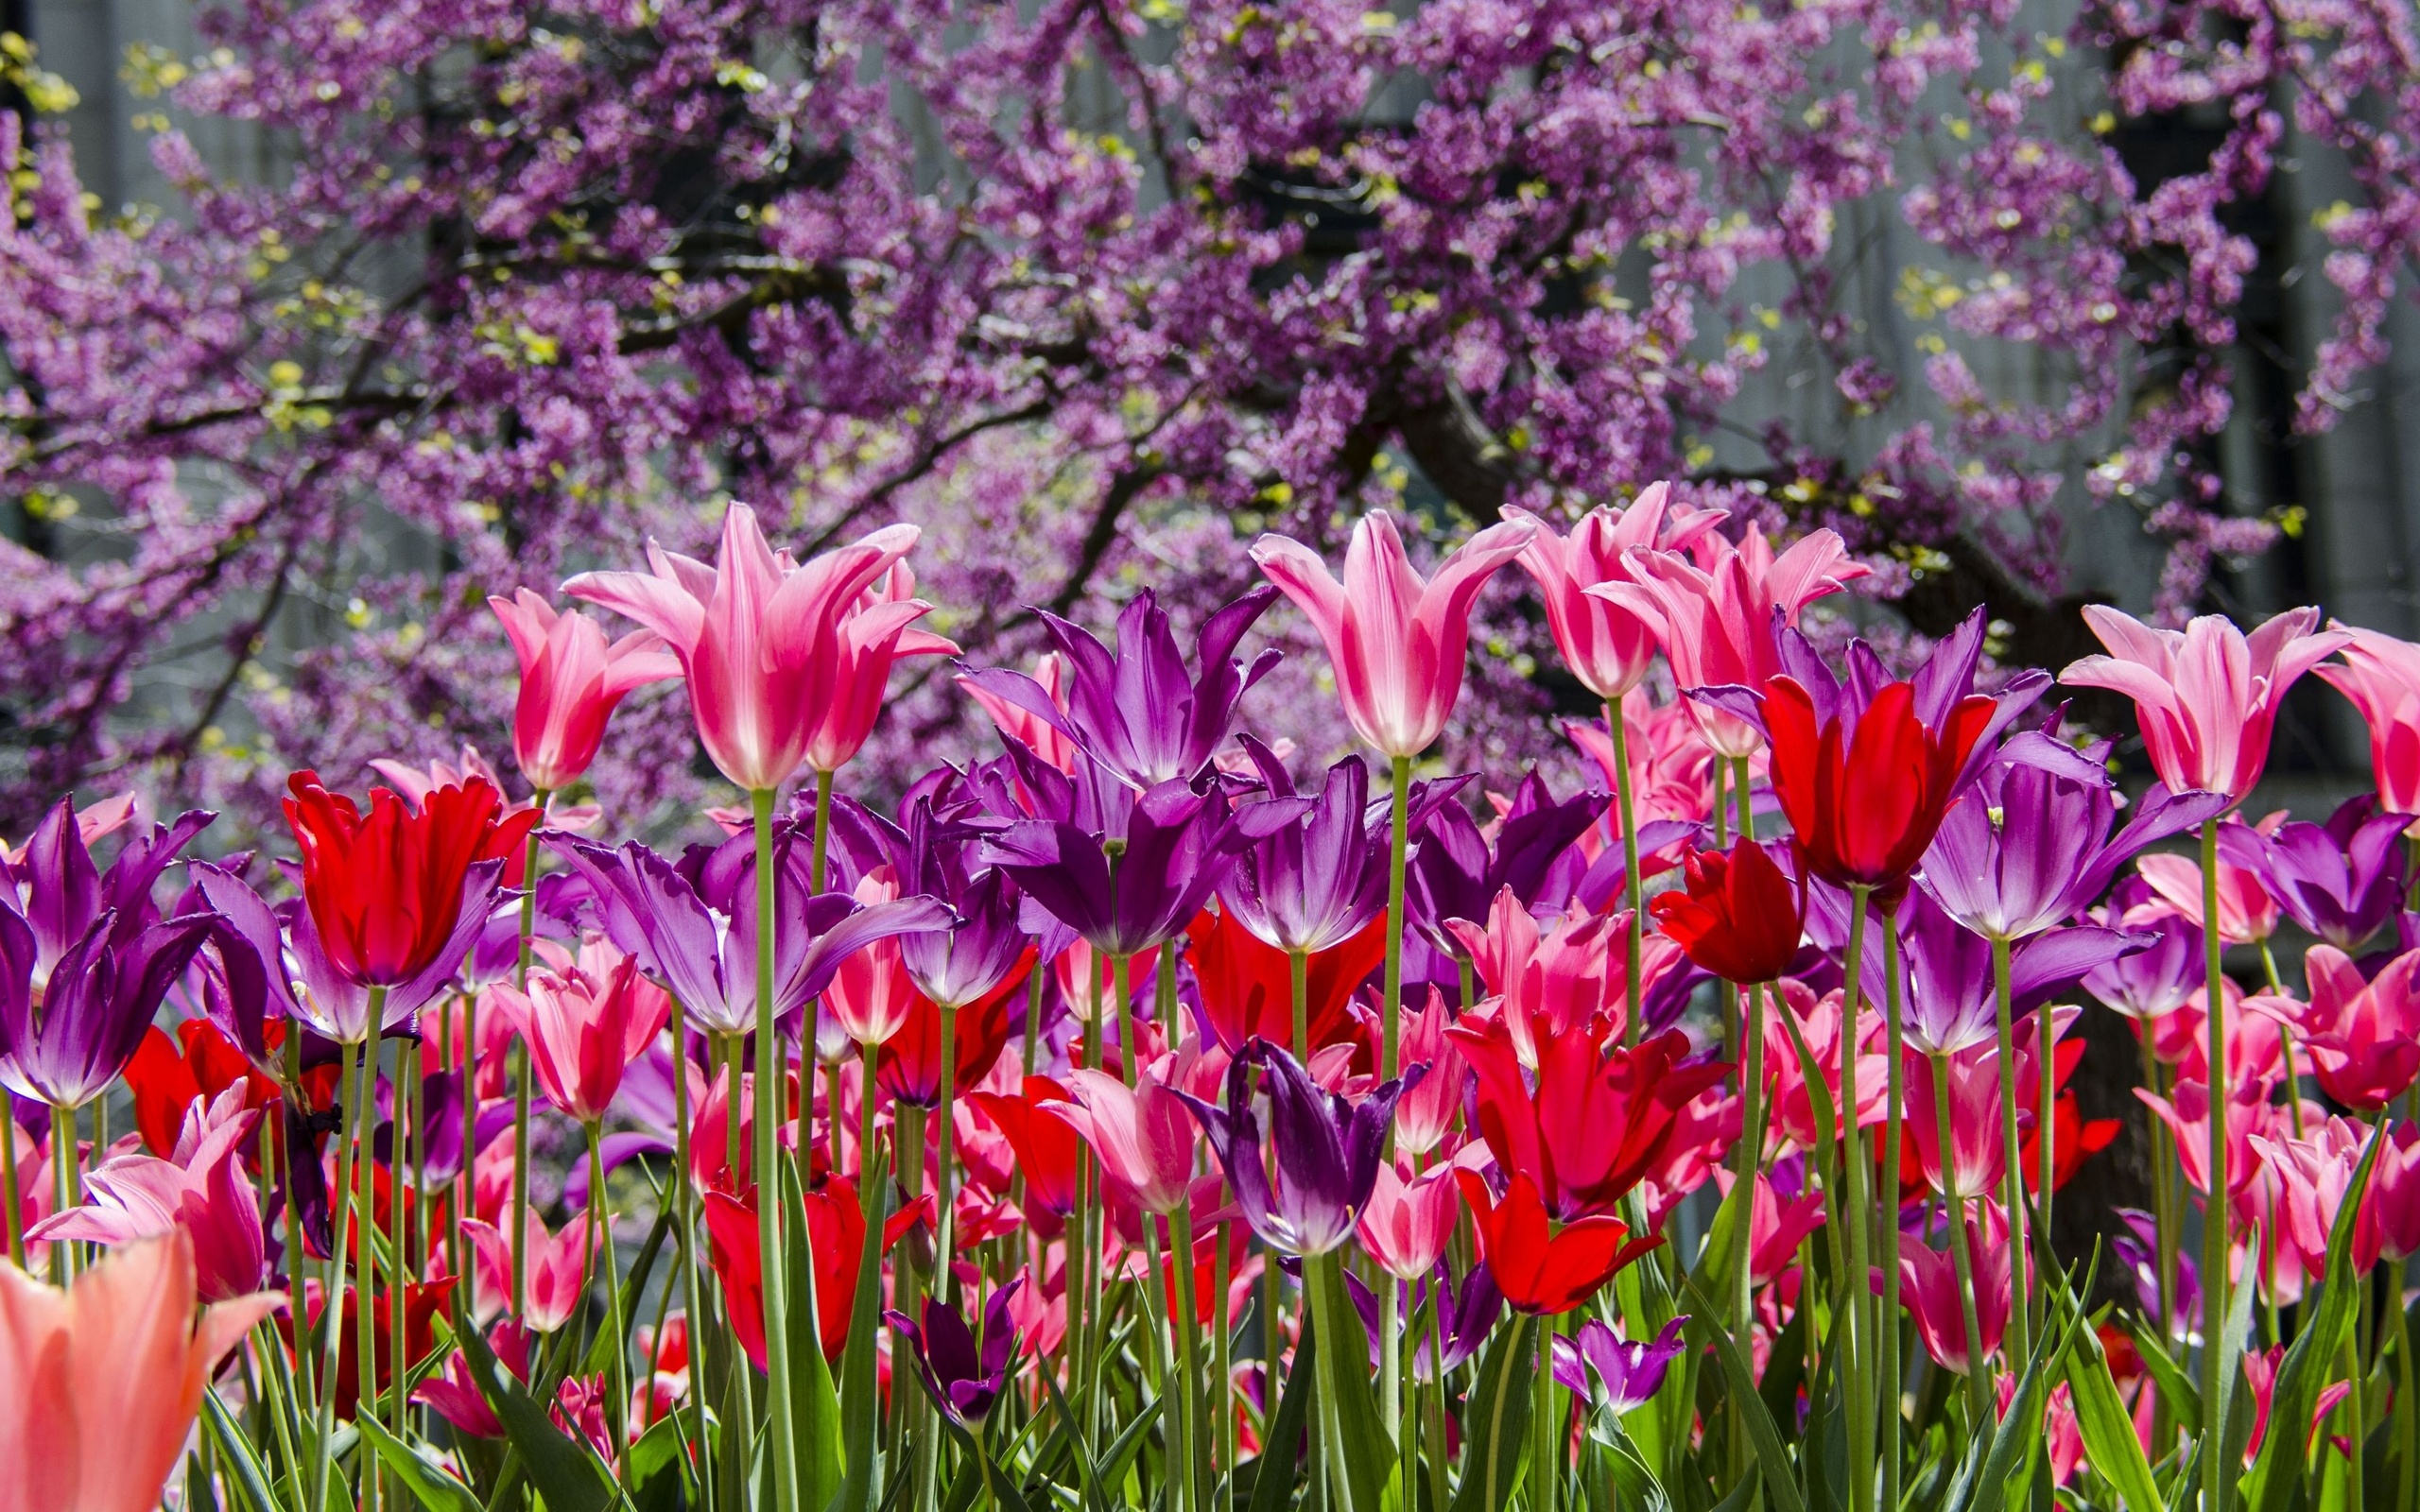 304380 descargar imagen tierra/naturaleza, tulipán, flores: fondos de pantalla y protectores de pantalla gratis